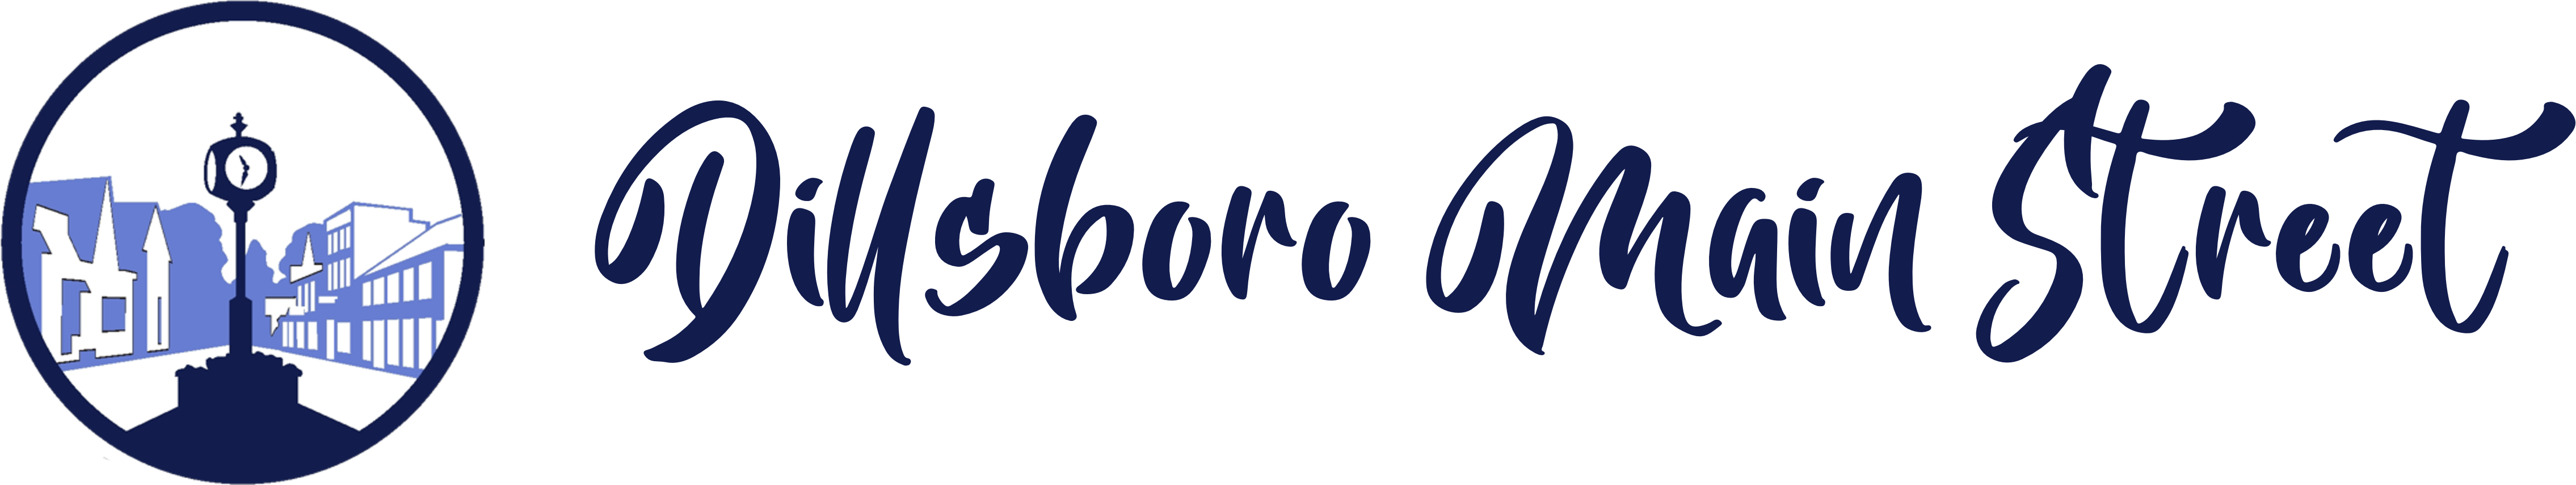 Dillsboro landscape logo